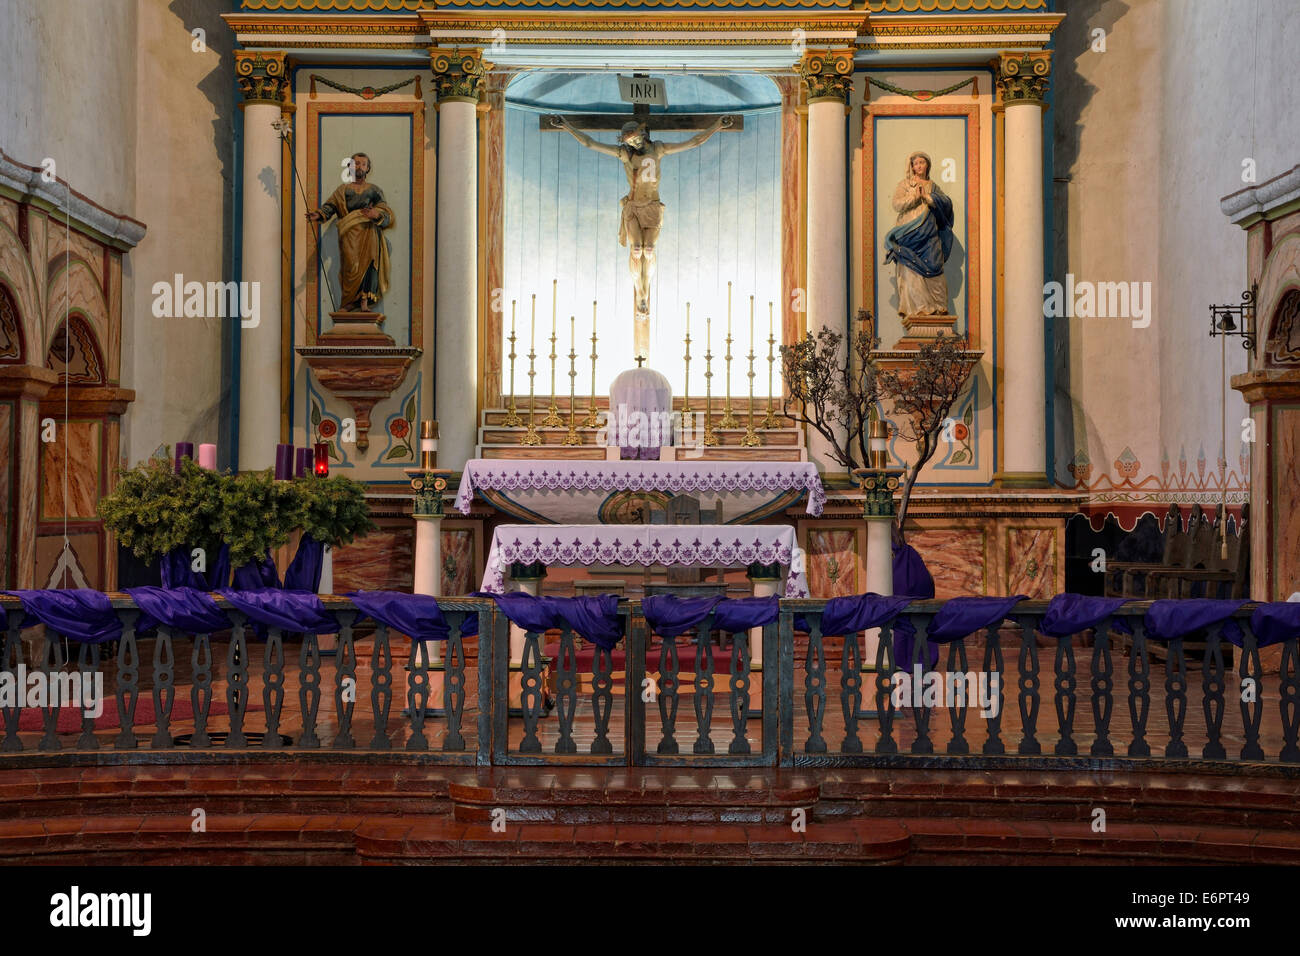 Main altar, Mission San Luis Rey de Francia, Oceanside, California, USA Stock Photo